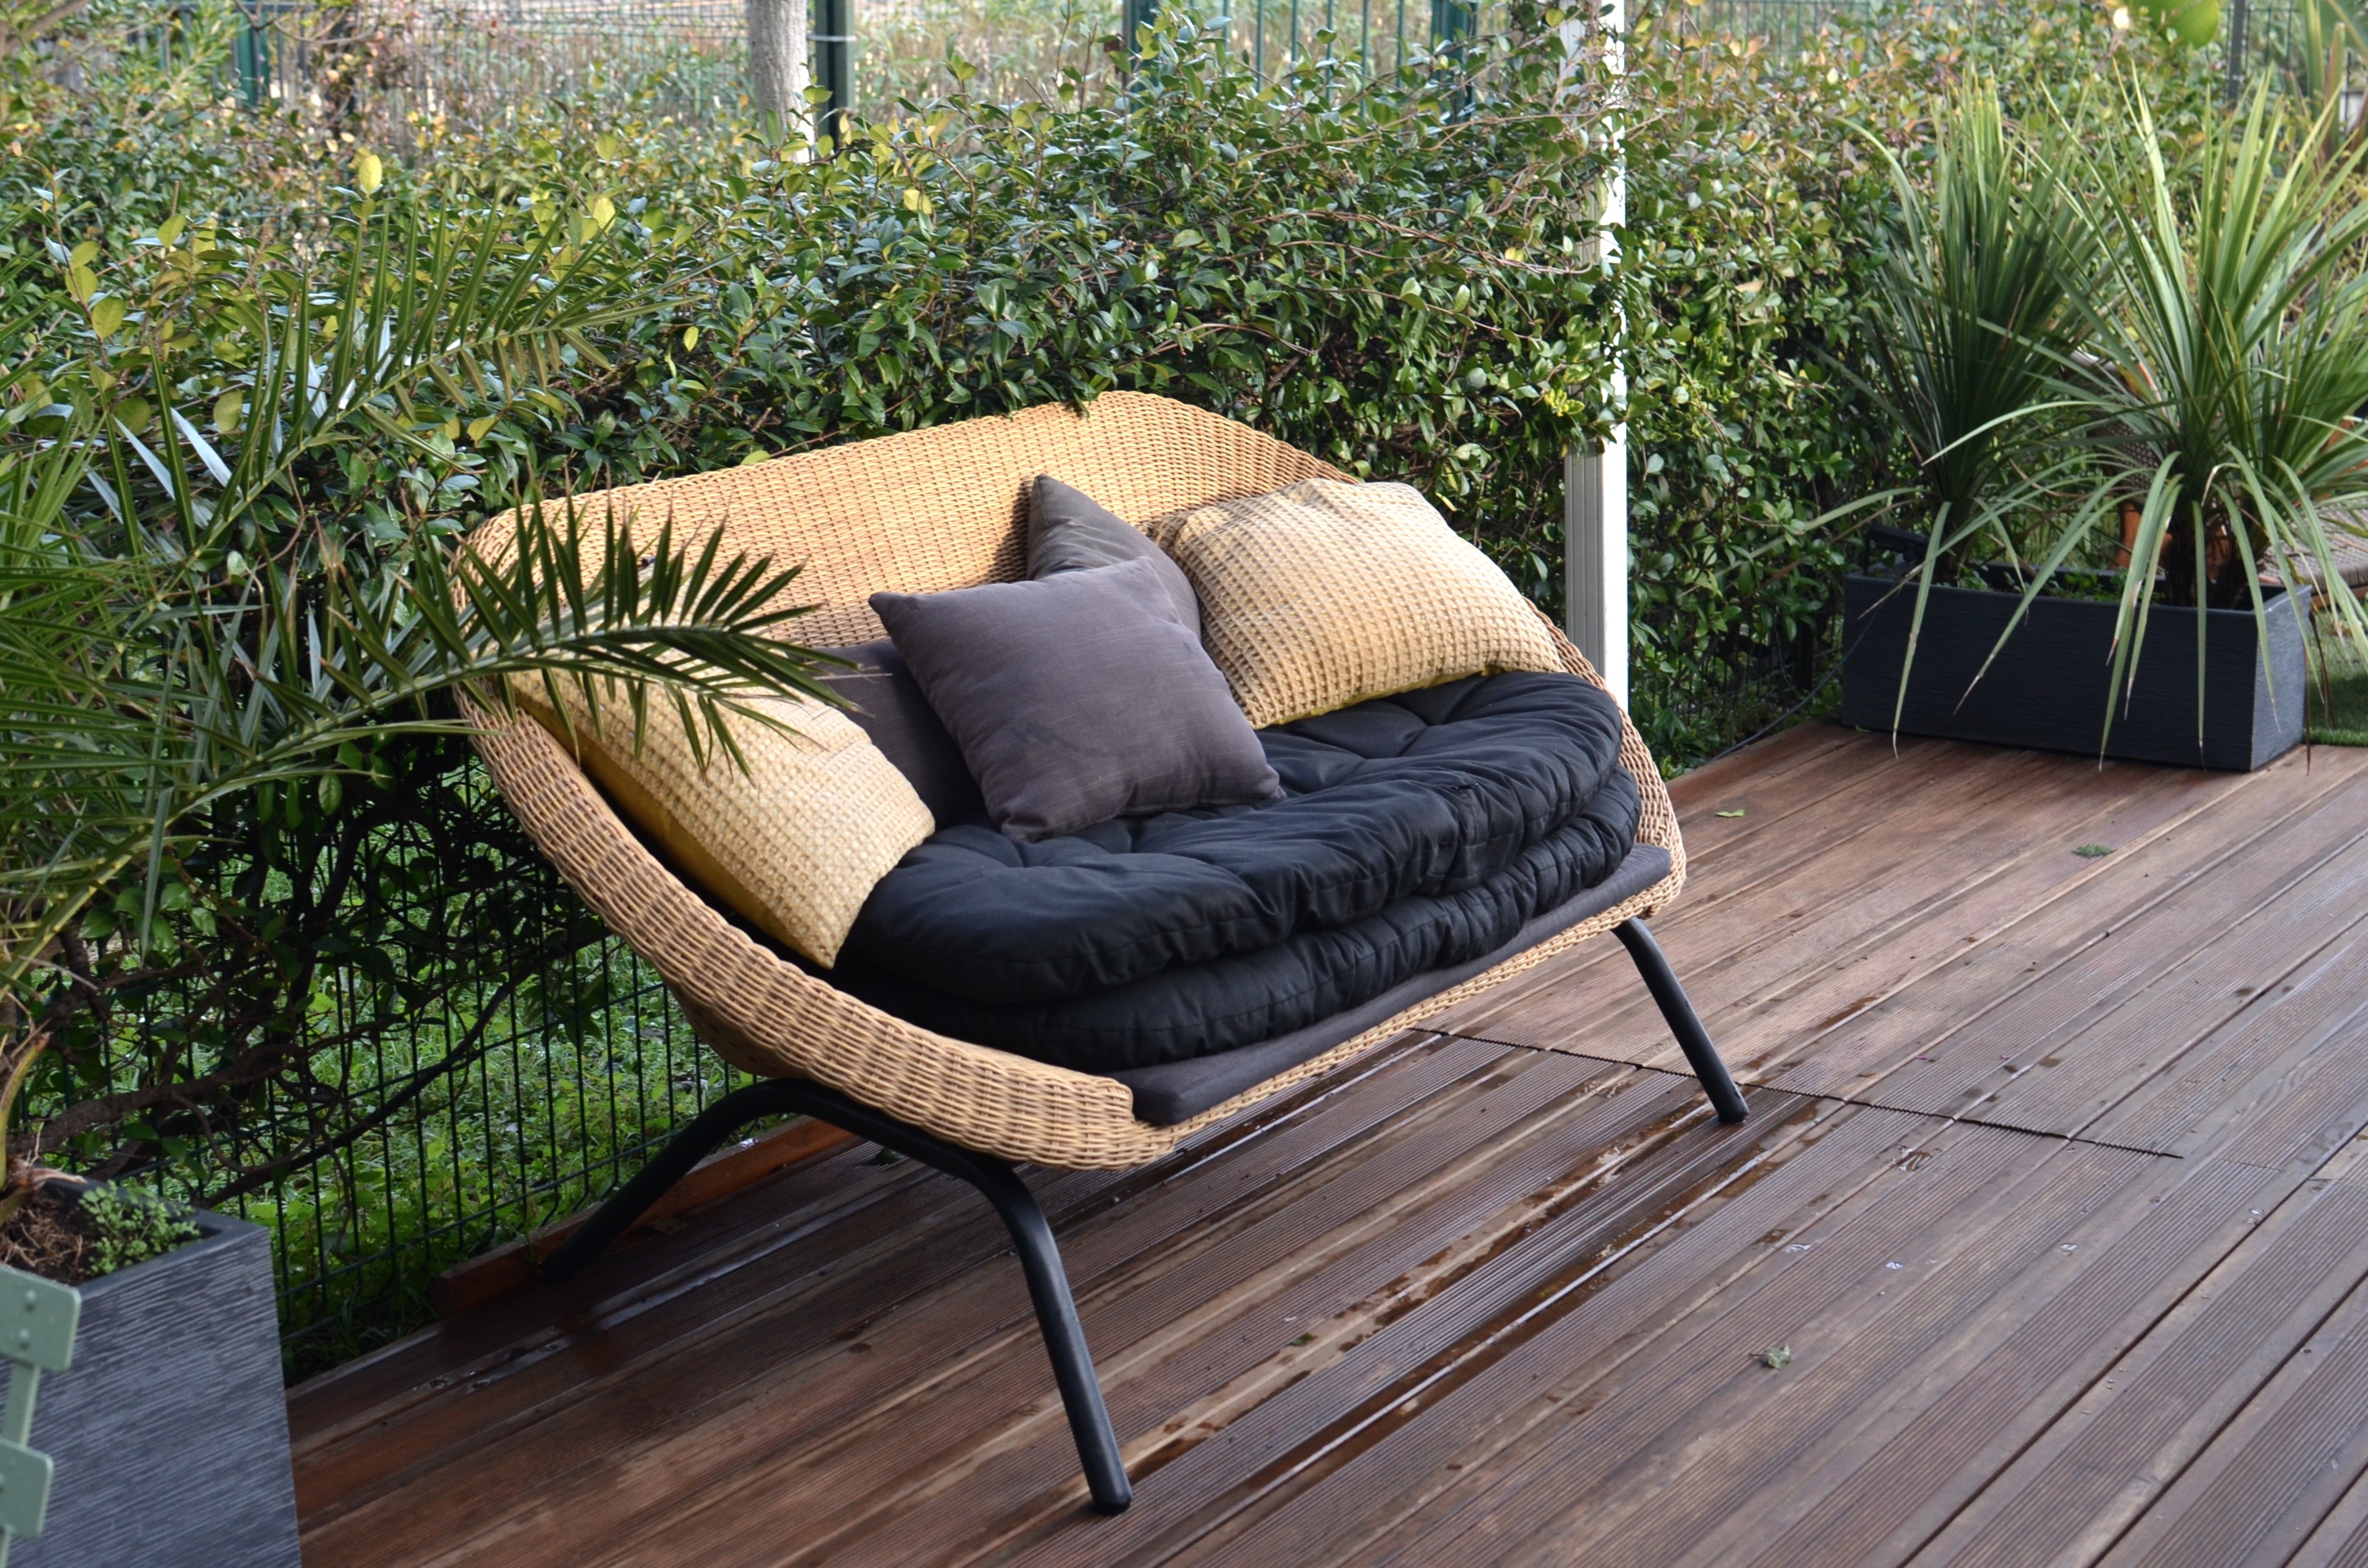 Mini woven rattan sofa on a decked patio